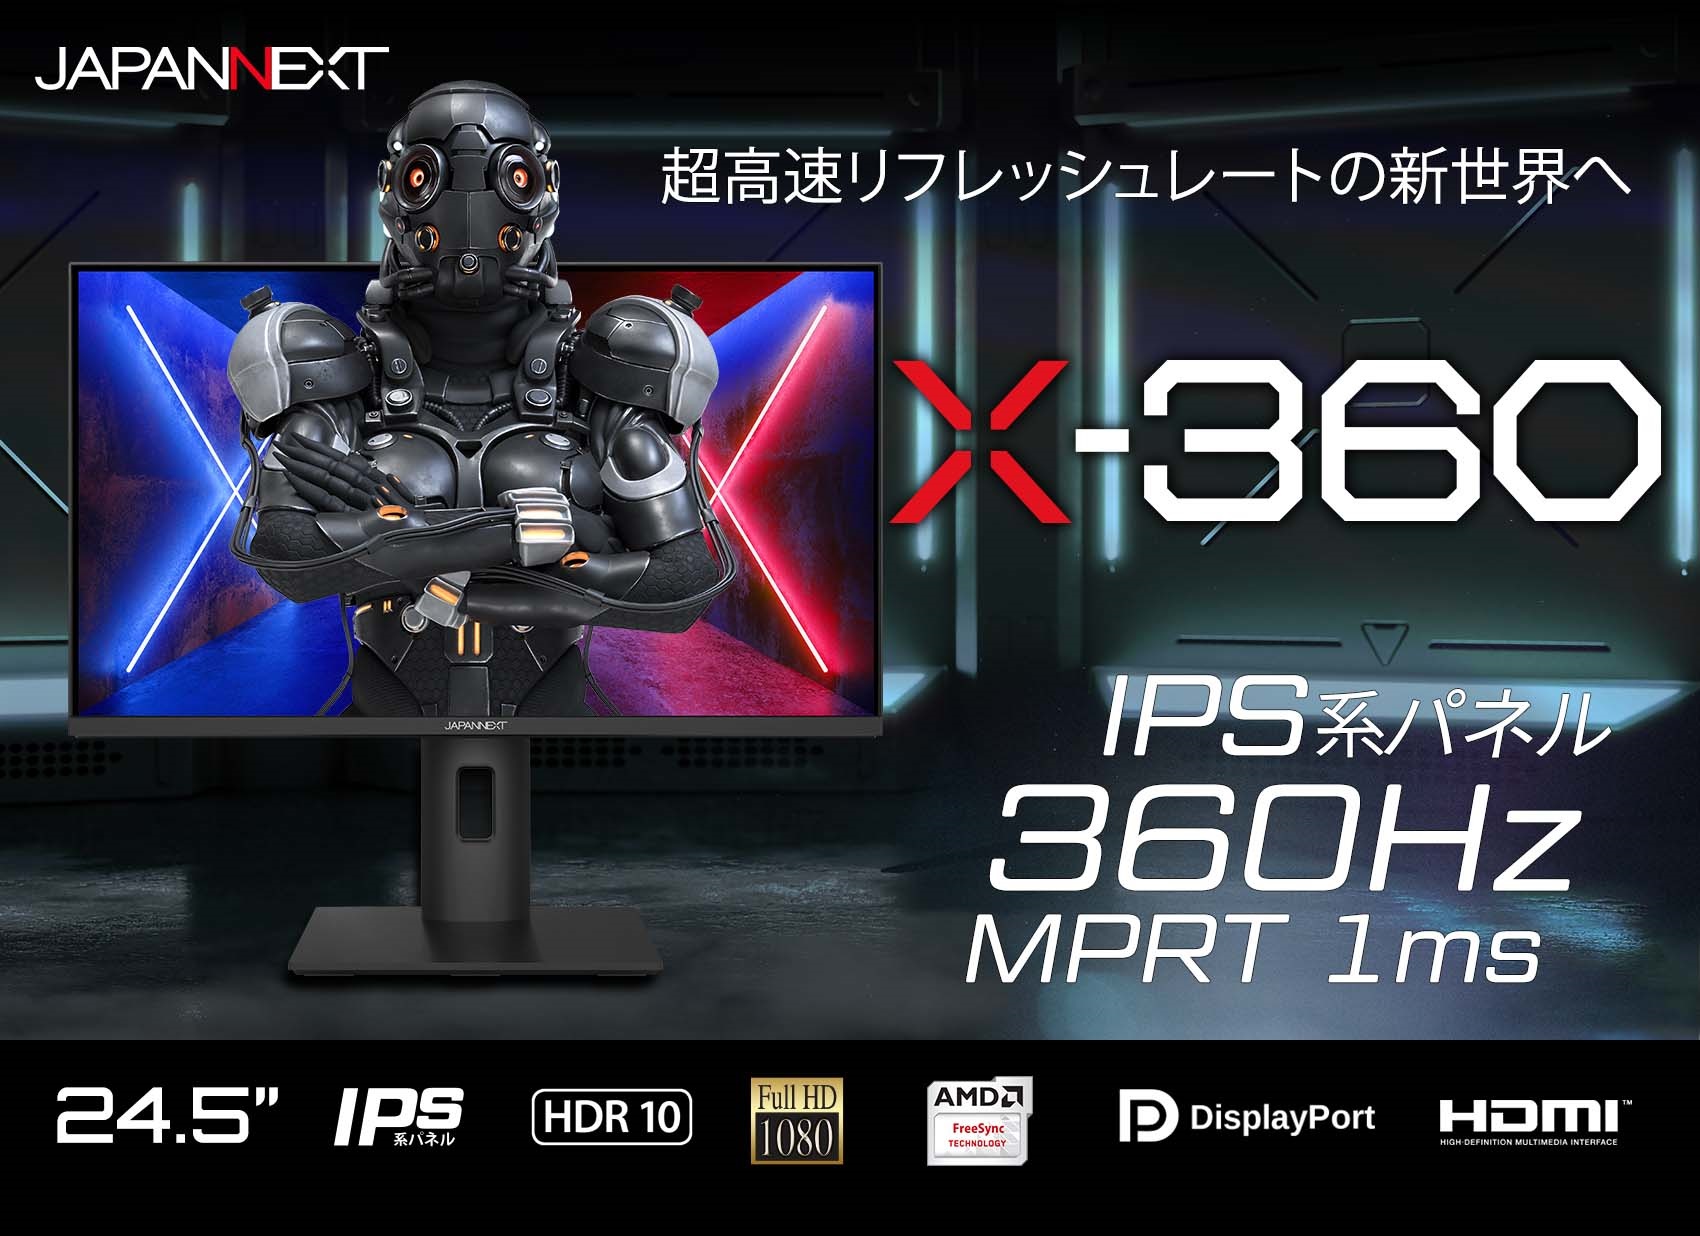 JAPANNEXT 「X-360」24.5型 IPS系パネル搭載 360Hz対応 フルHD 